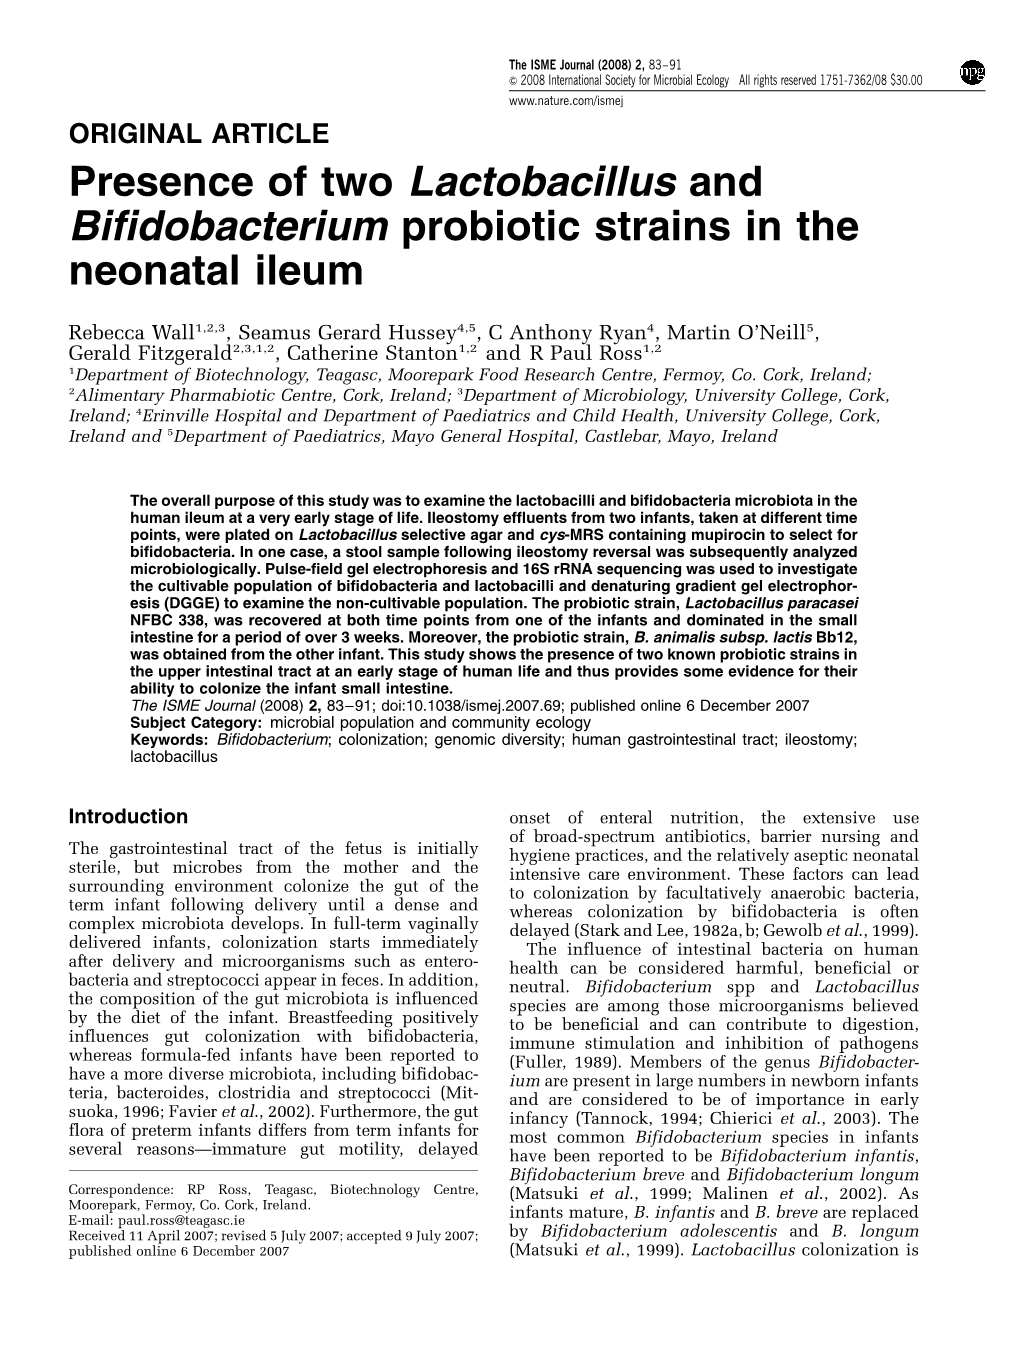 Presence of Two Lactobacillus and Bifidobacterium Probiotic Strains in the Neonatal Ileum